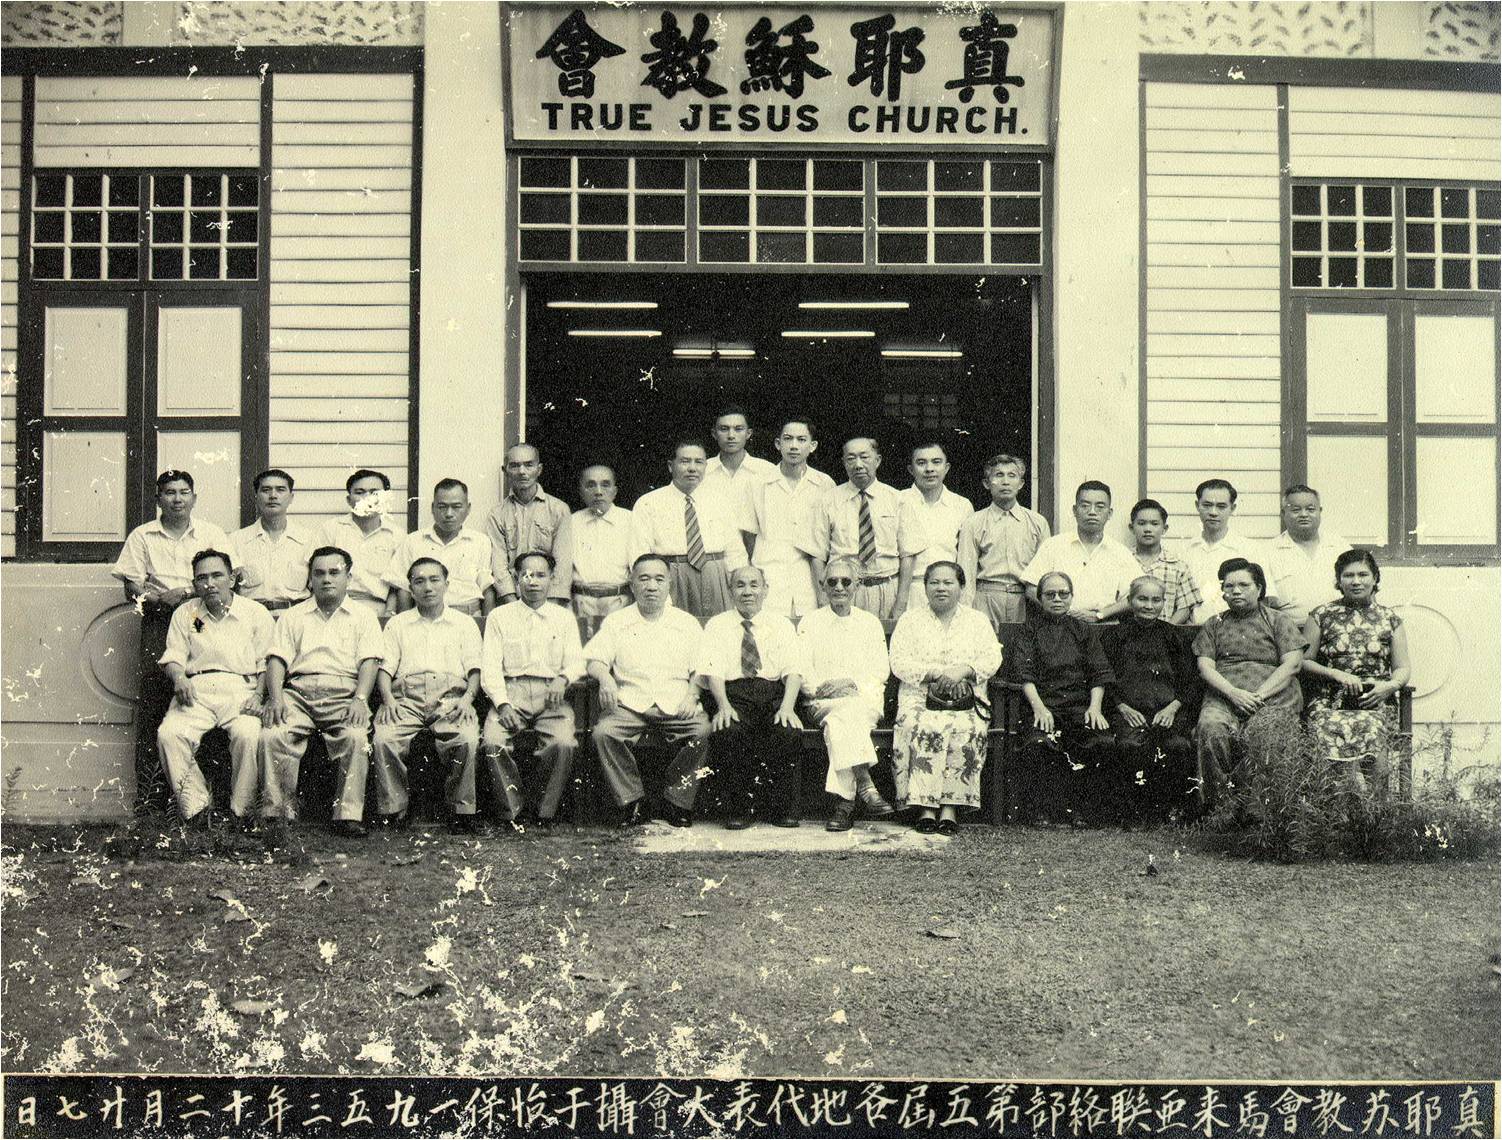 TJC Malaya Coordination Board 5th Annual Meeting in Ipoh 真耶稣教会马来亚各地代表大会于怡保 27/12/1953